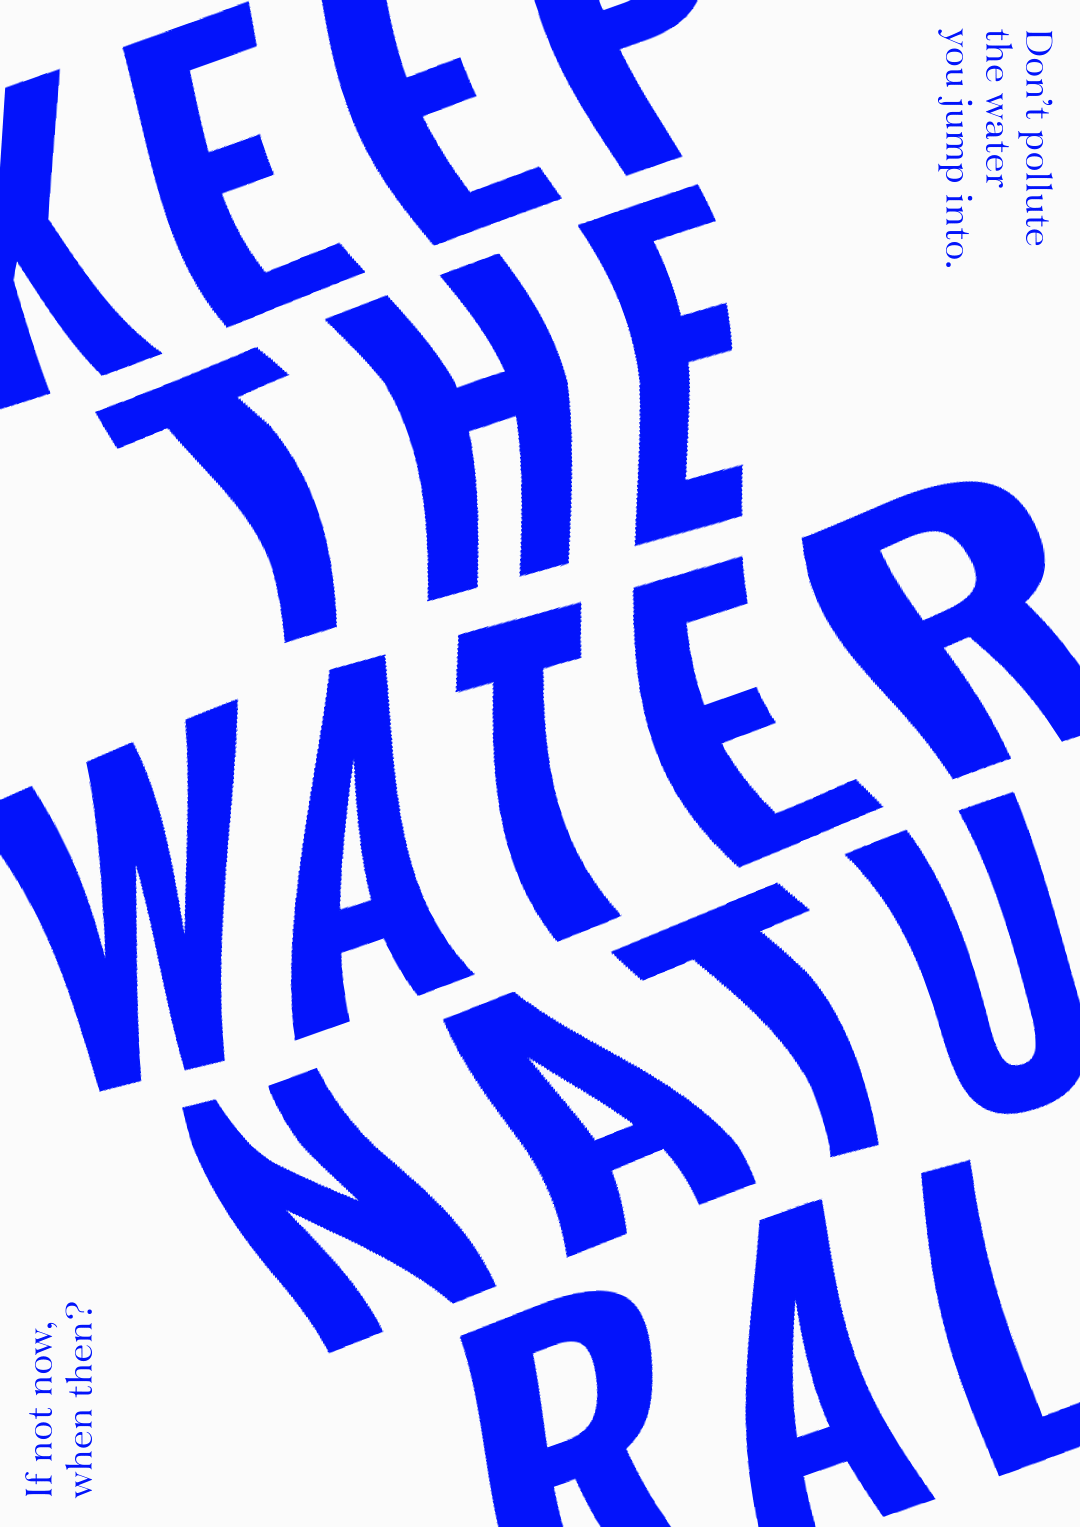 02_Keep the water natural